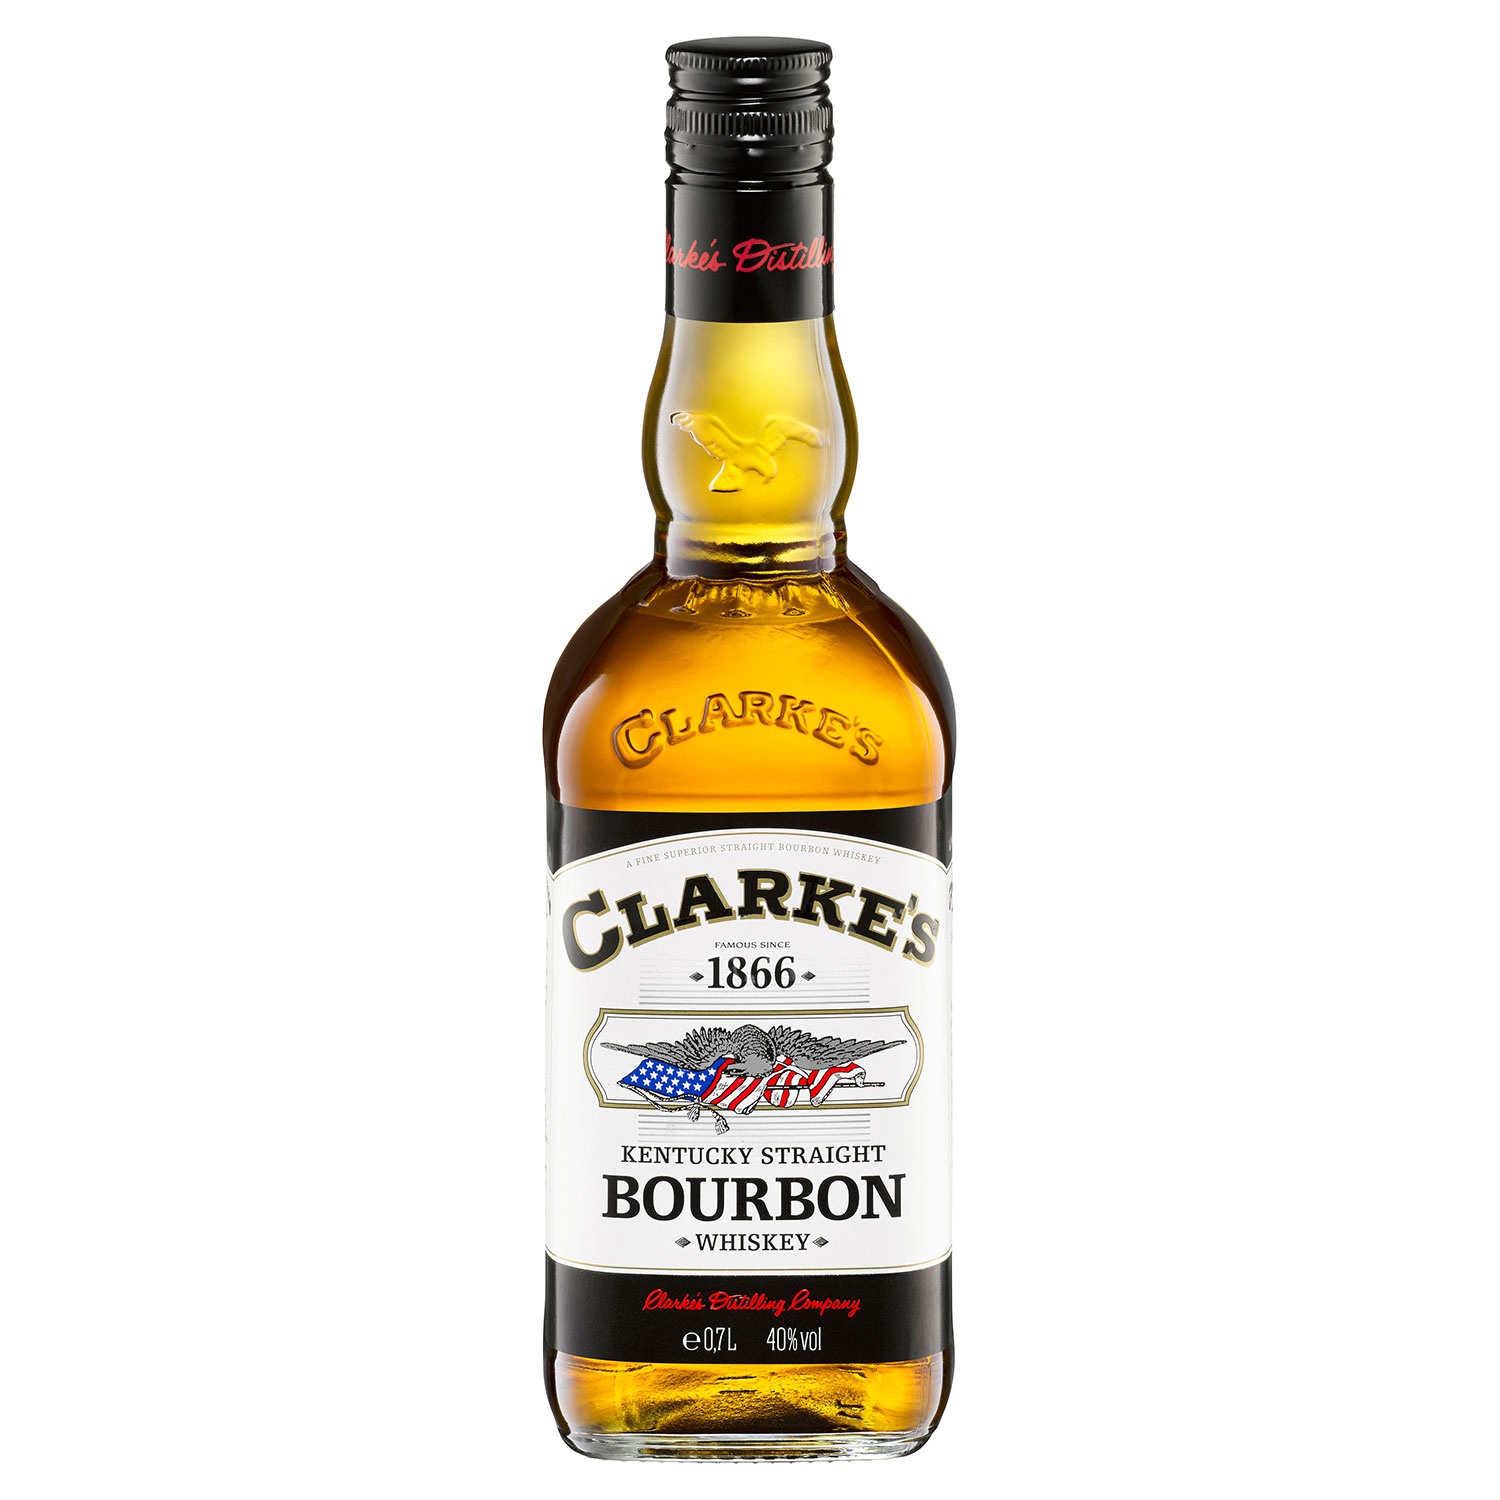 CLARKE'S Bourbon Whiskey 0,7 l